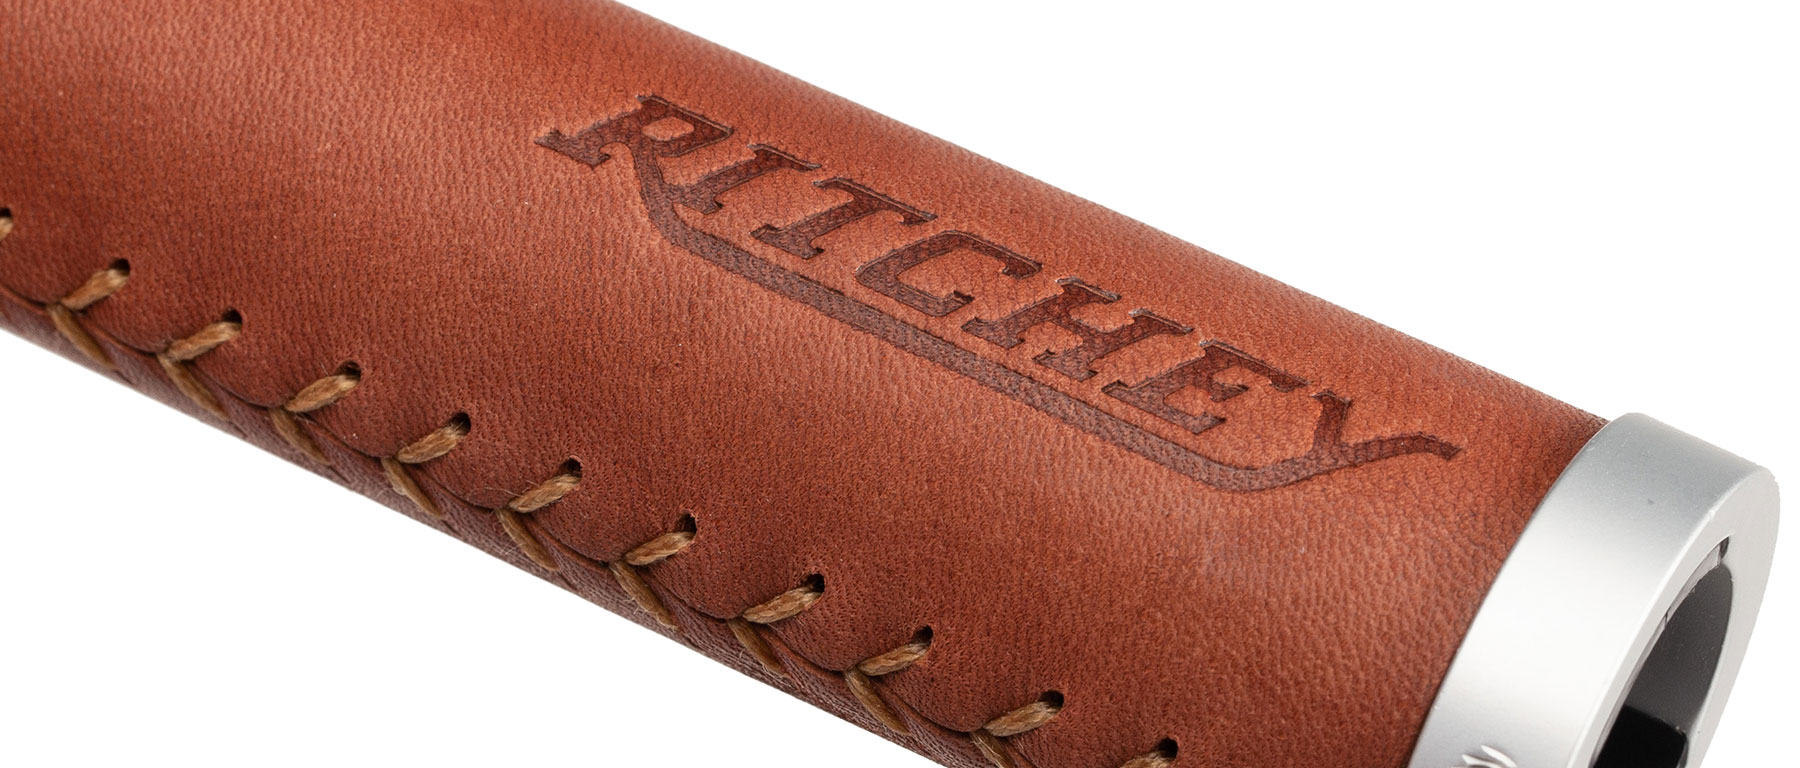 Ritchey Classic Locking Genuine Leather Grips